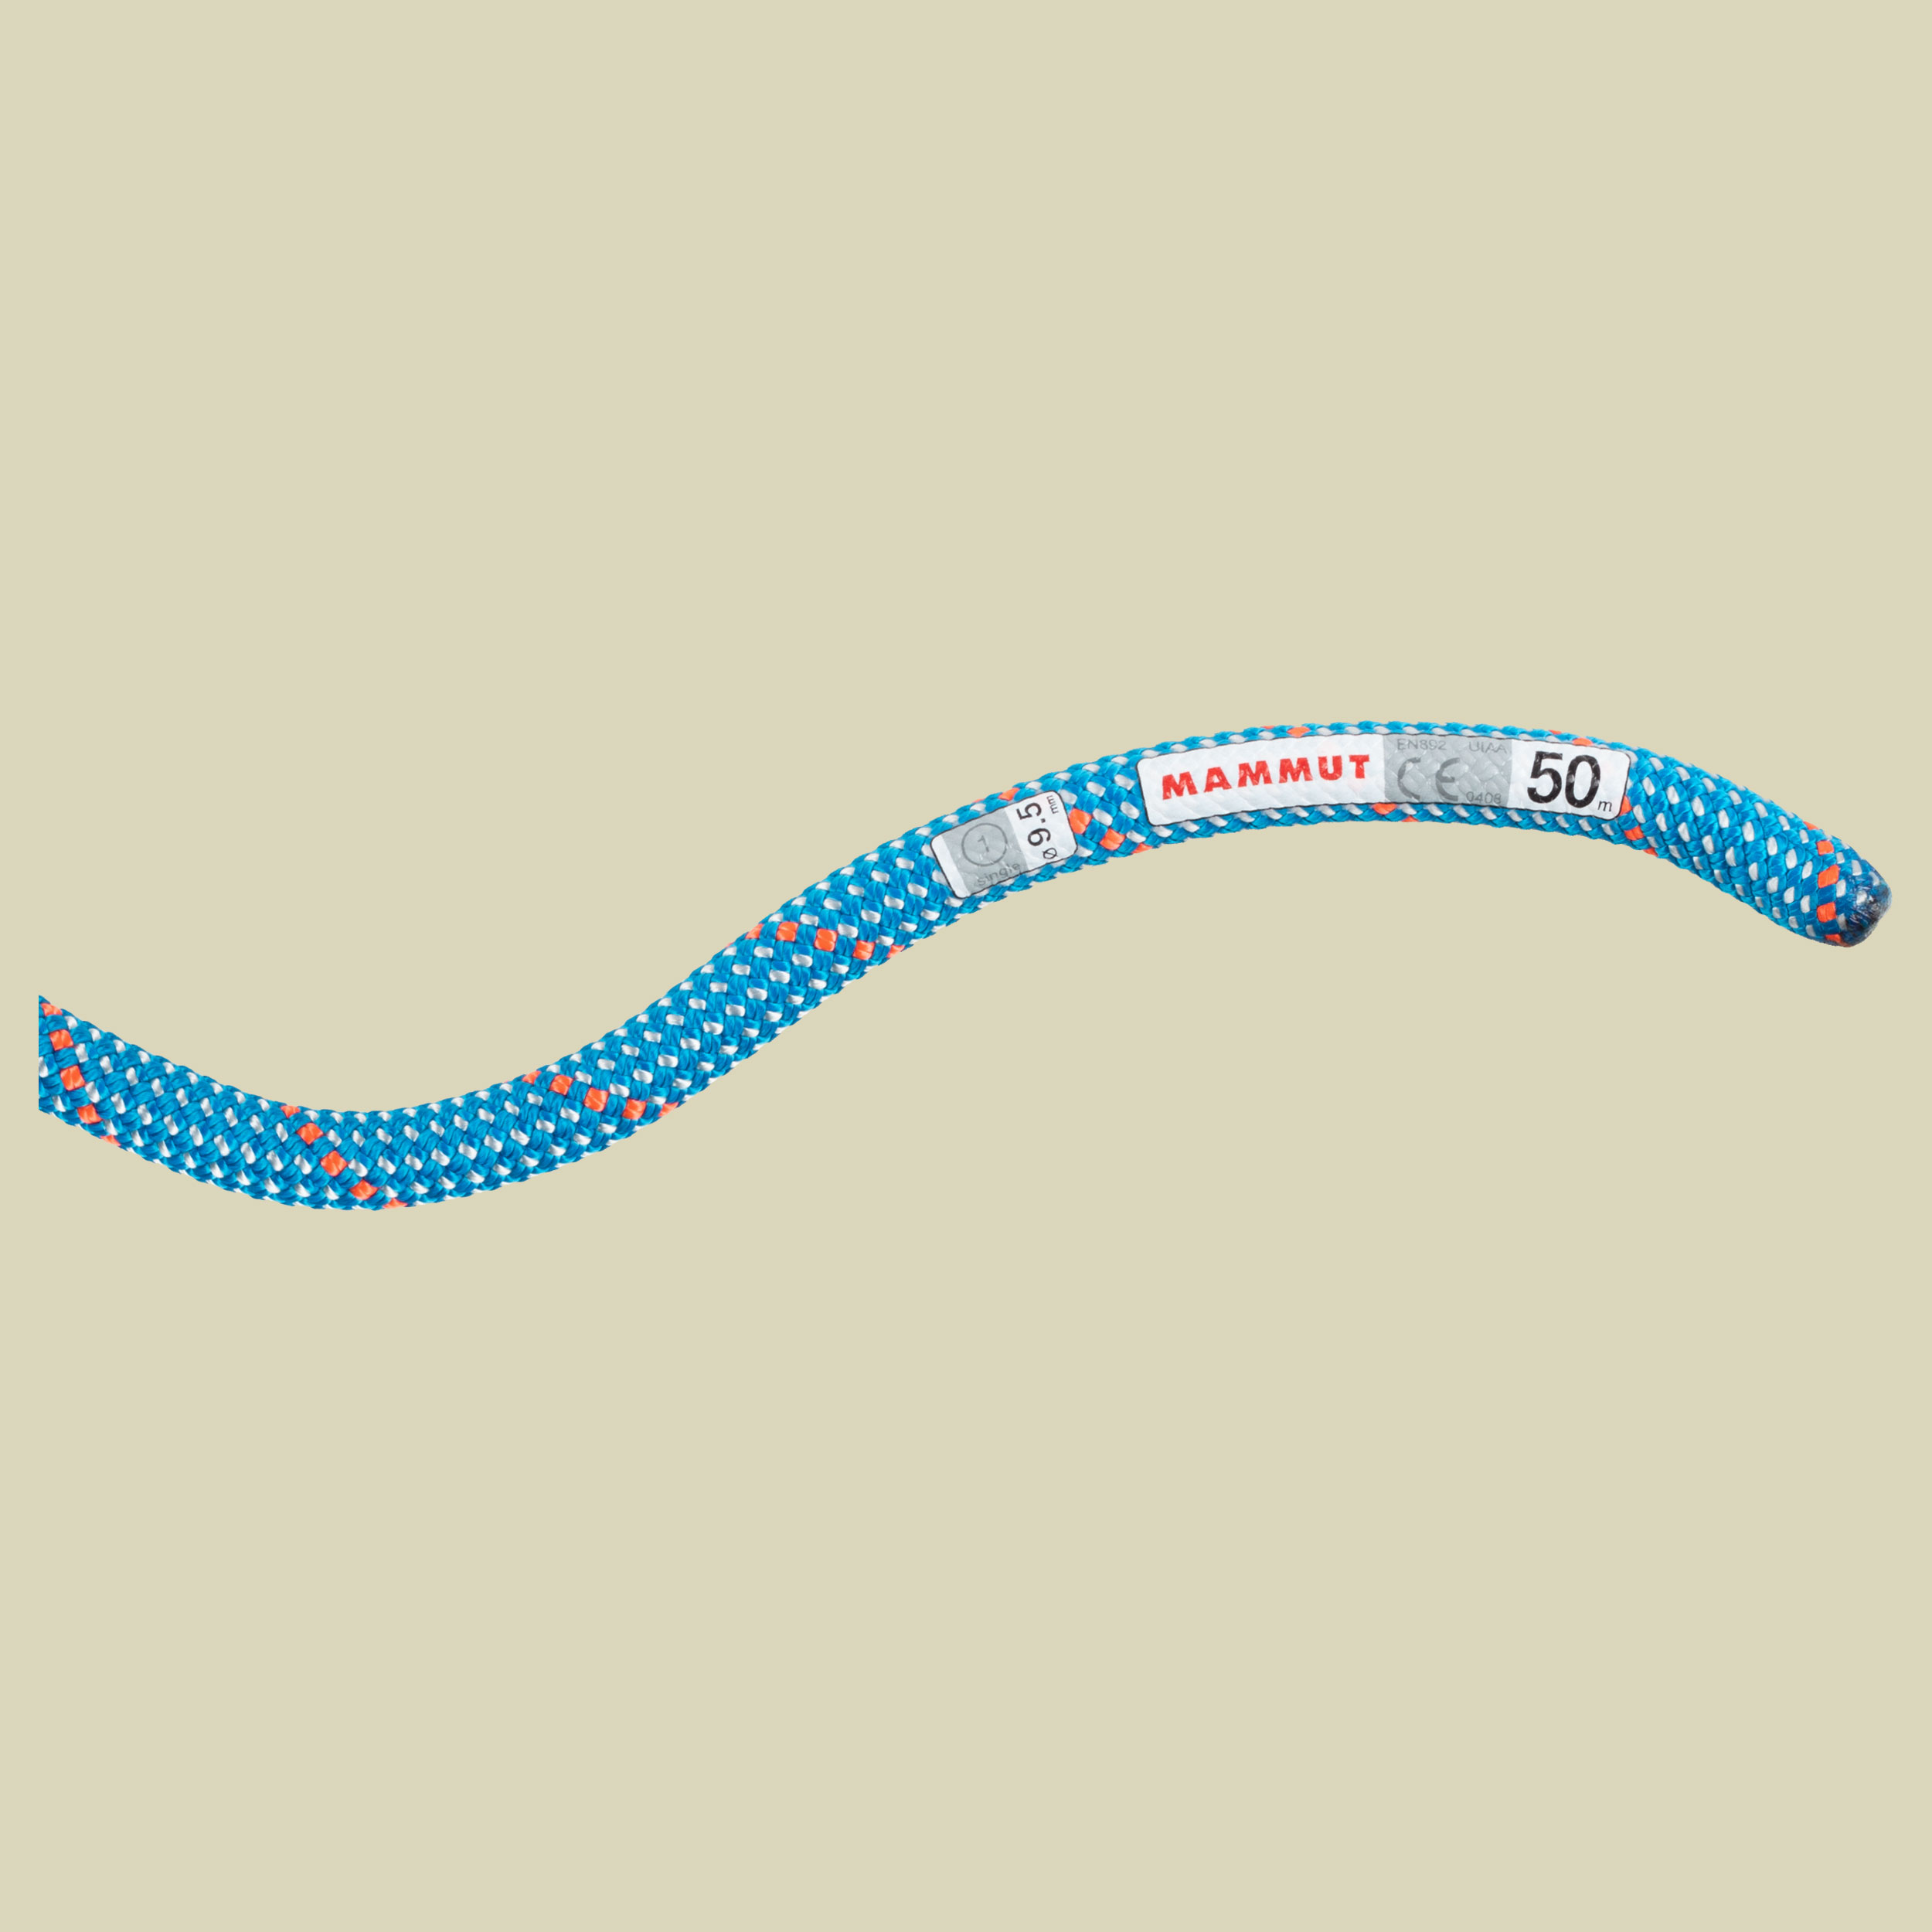 9.5 Crag Classic Rope Länge 70 m Farbe Classic Standard blue-white